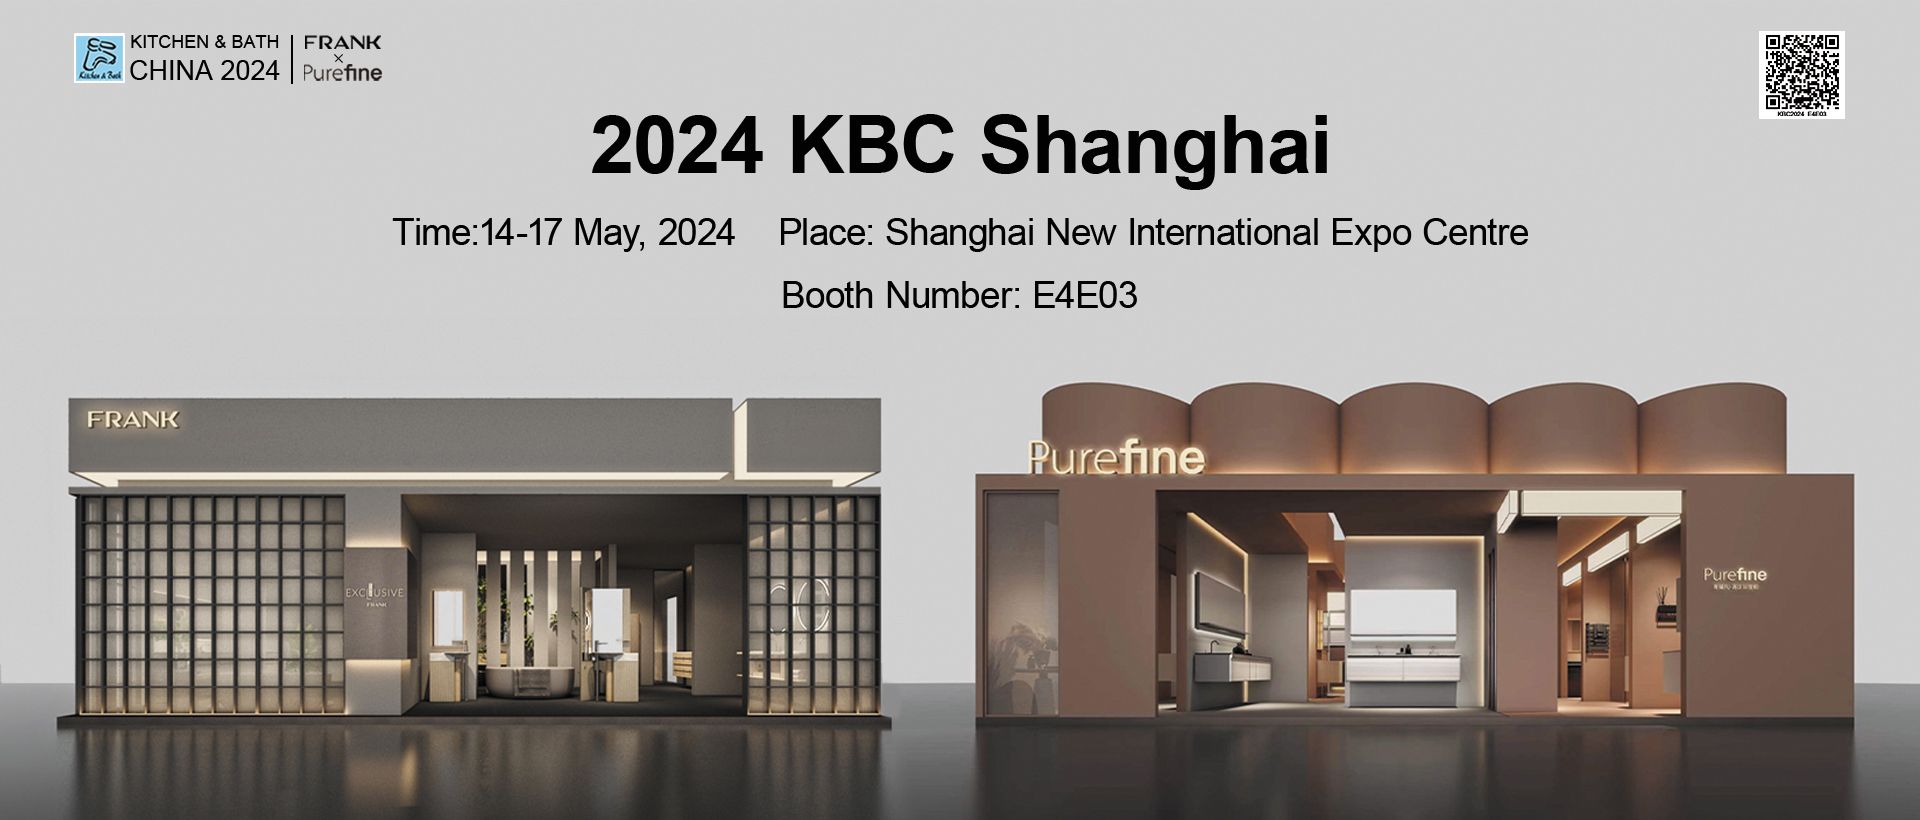 2024 Kitchen&Bath China Shanghai